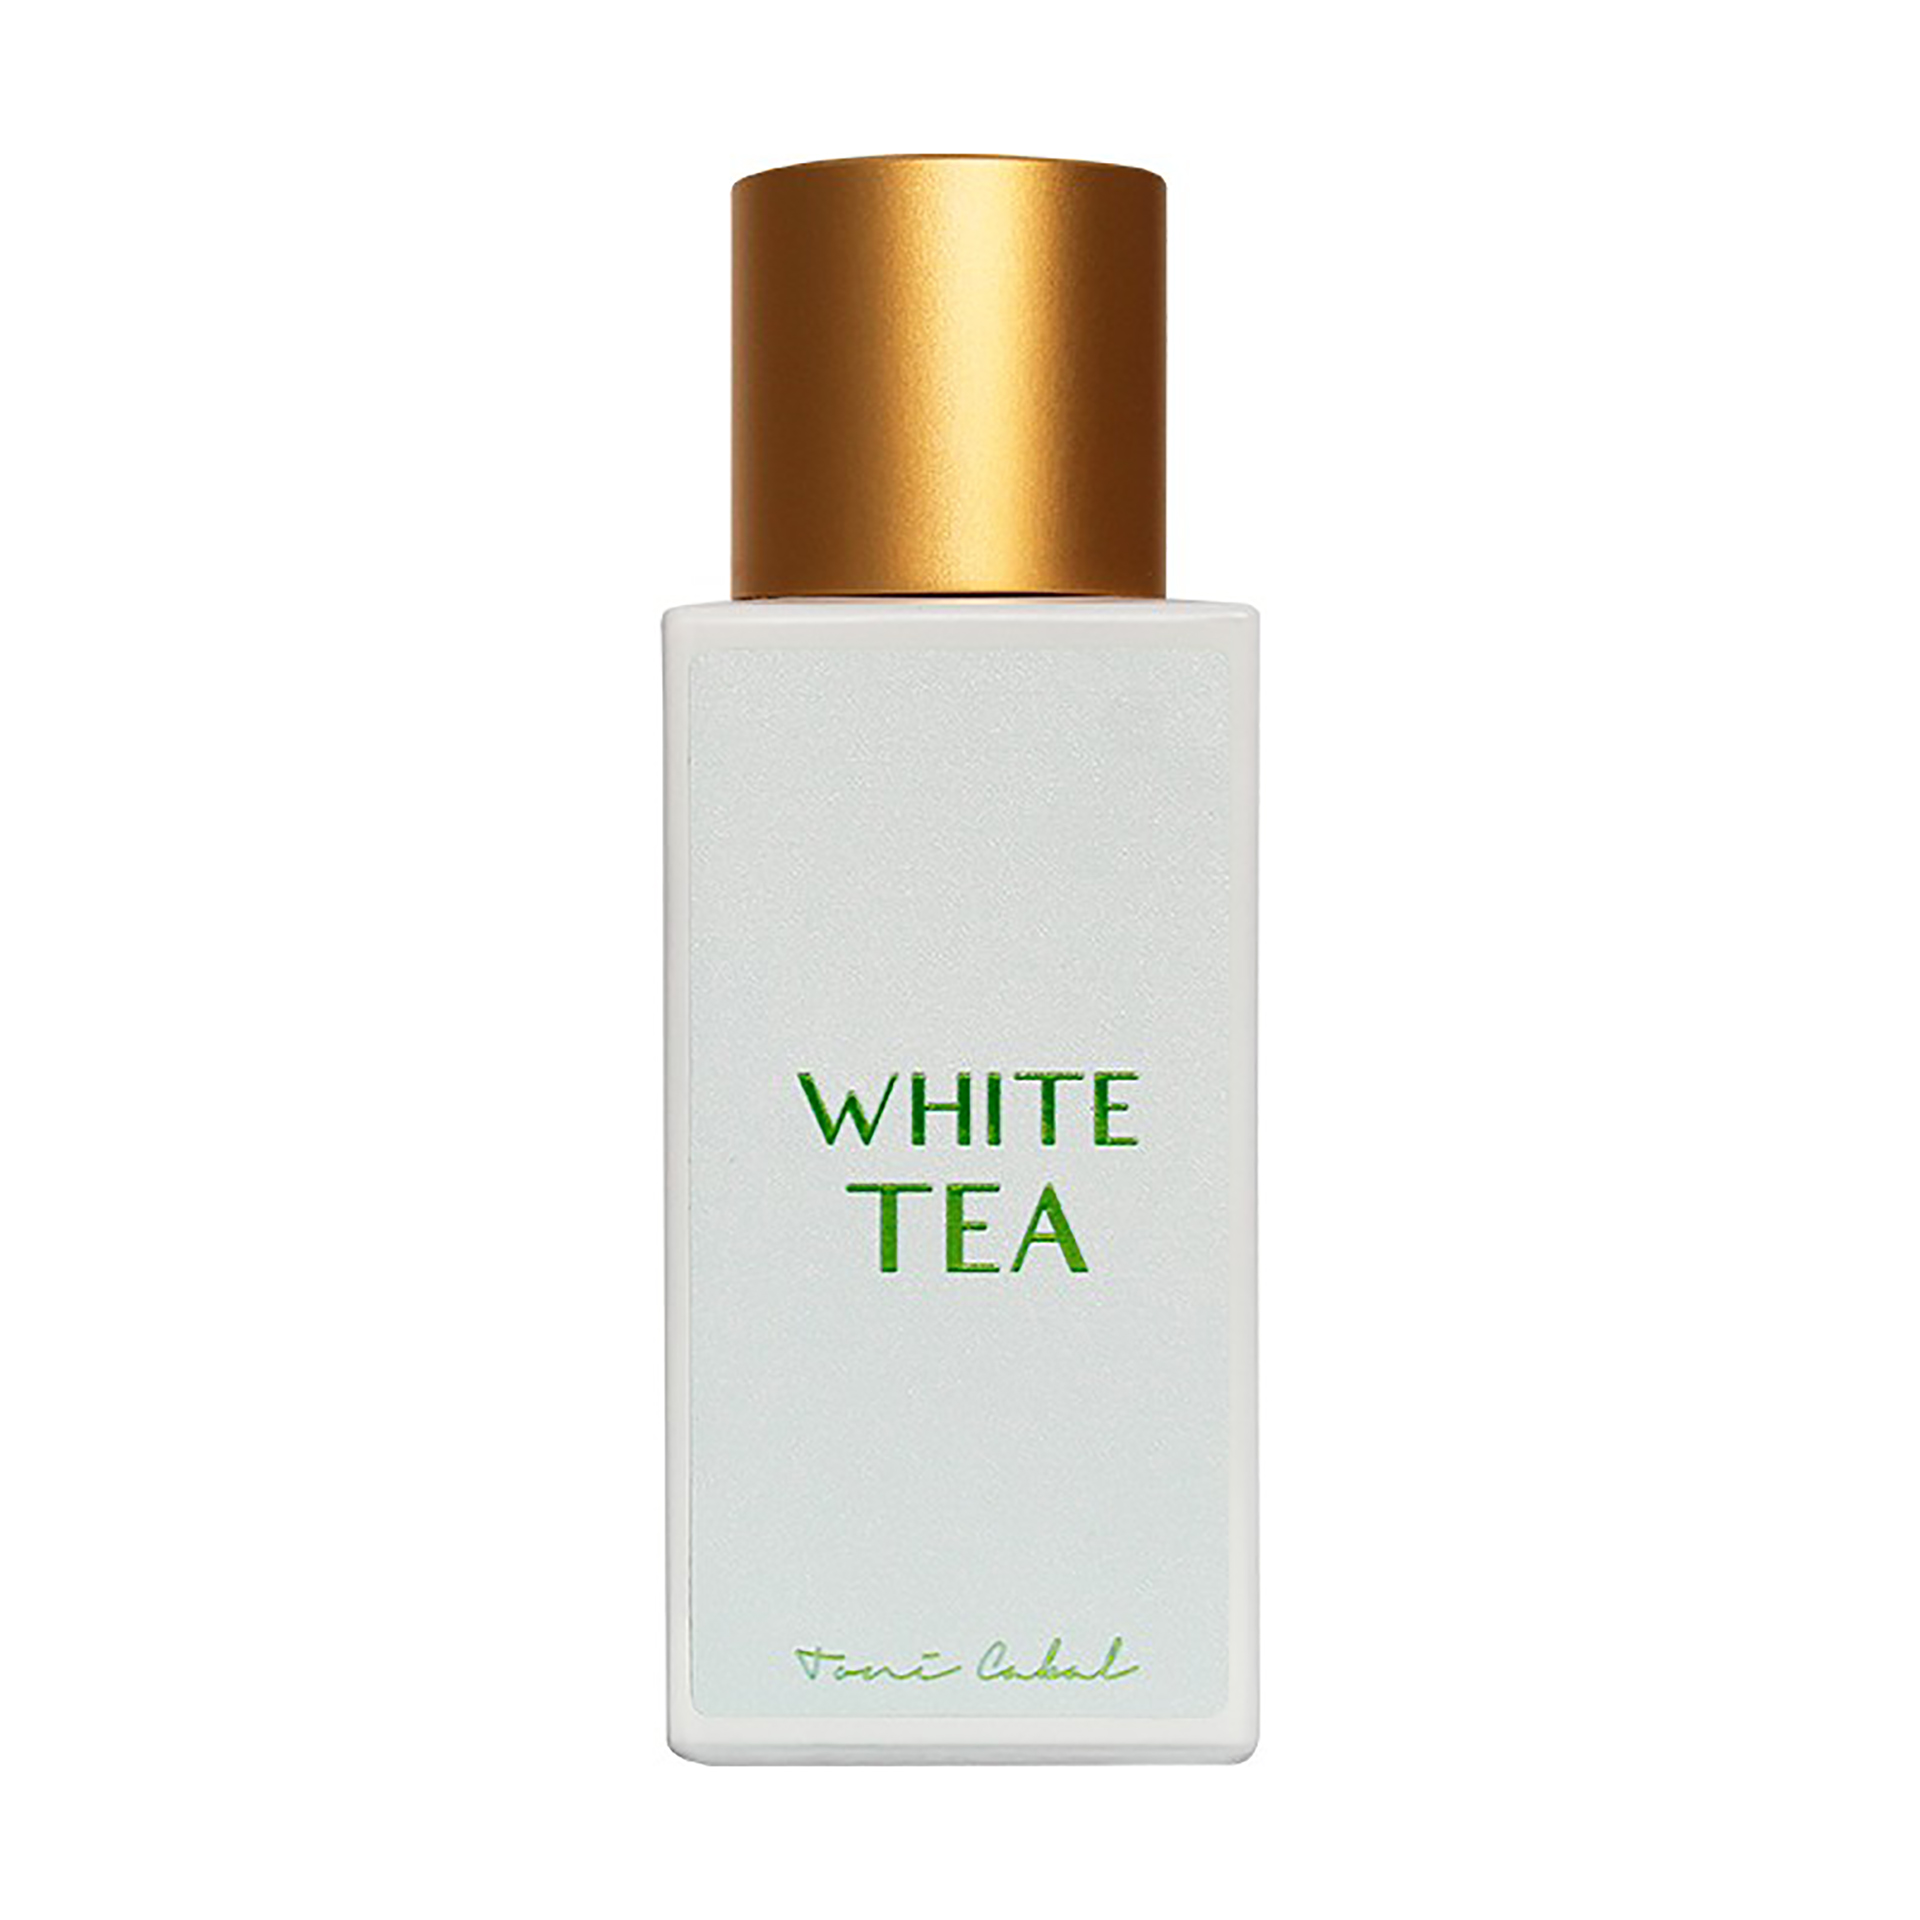 white tea 50ml toni cabal daring light perfumes niche barcelona